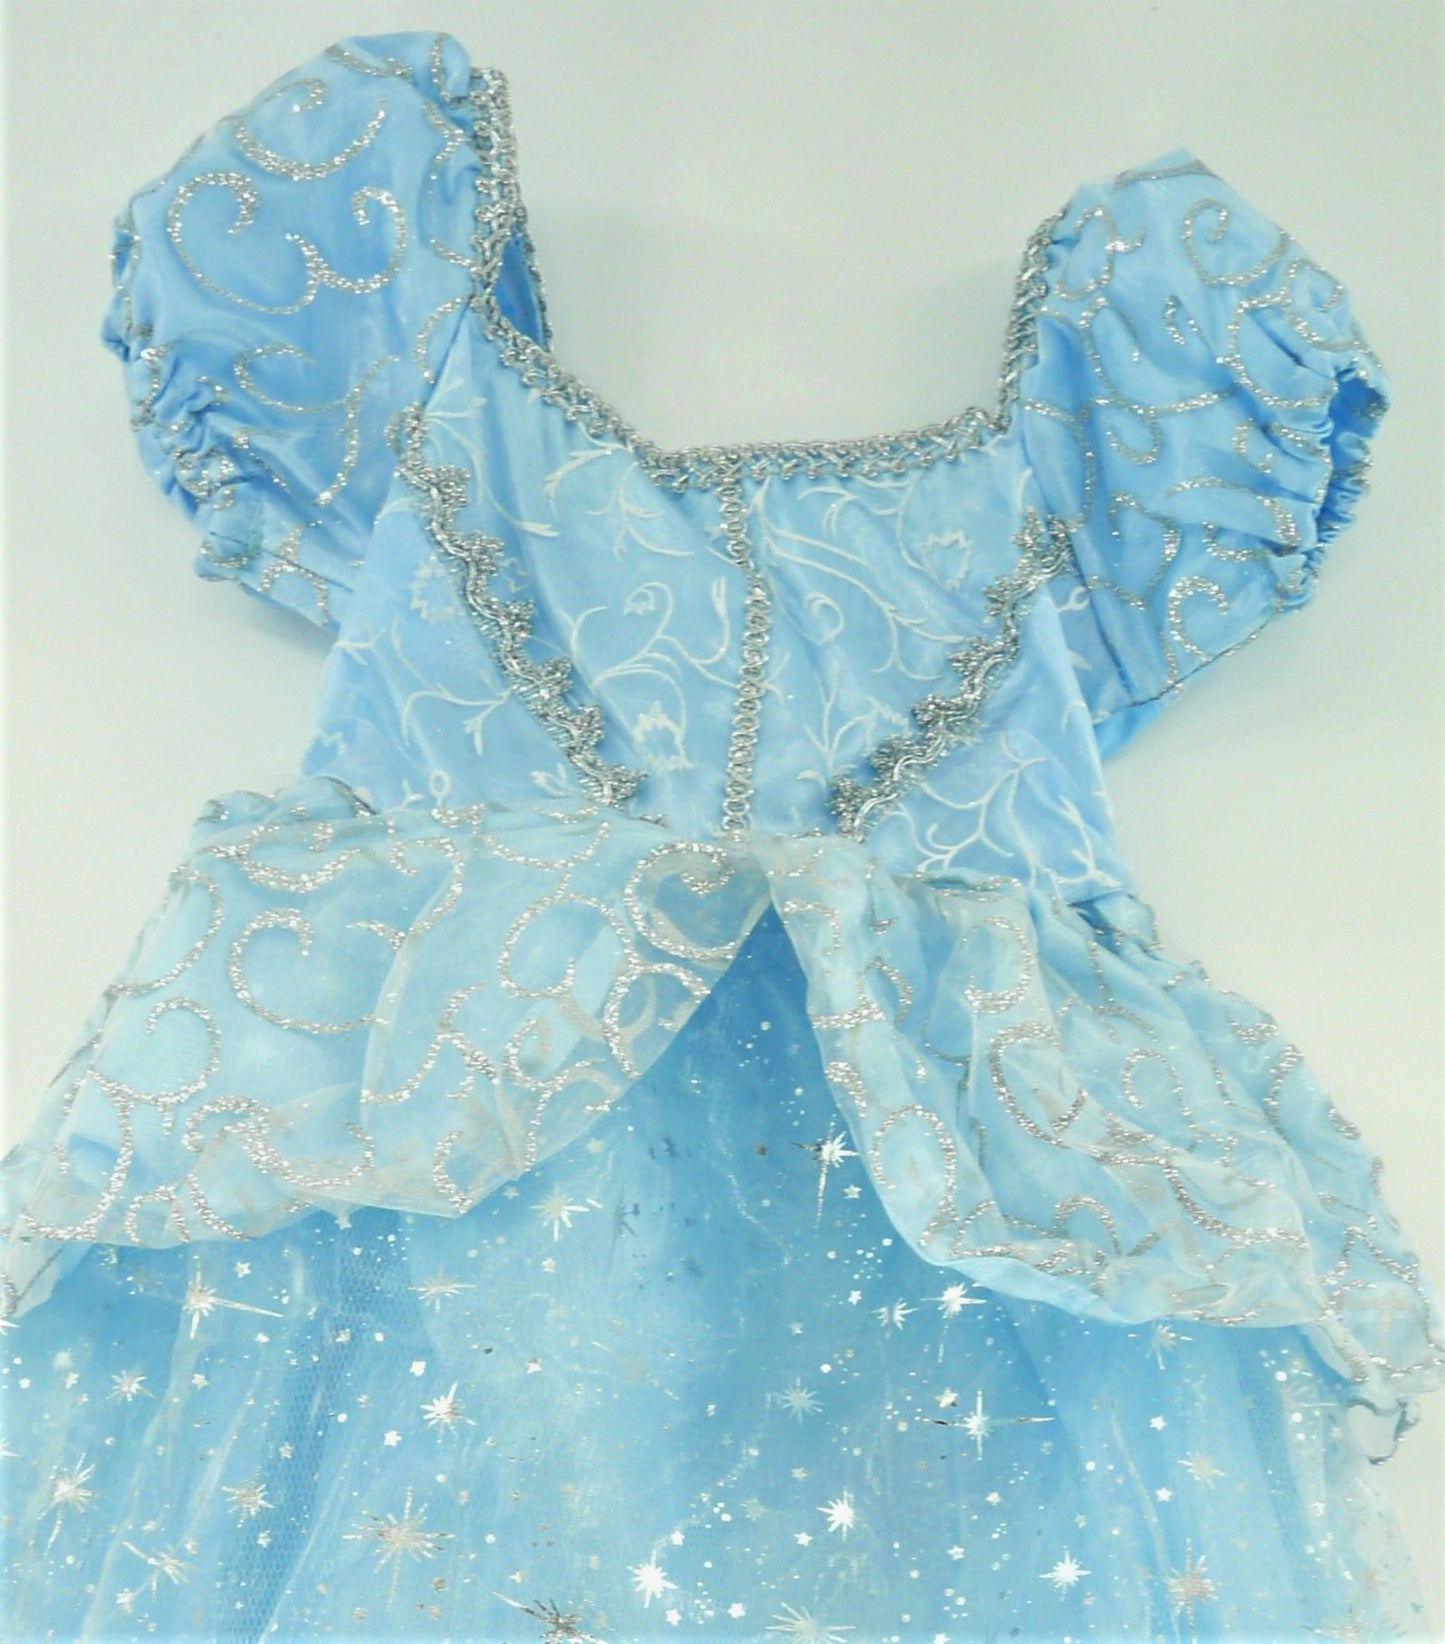 Blue Princess Fancy Dress Costume Toddler age 3